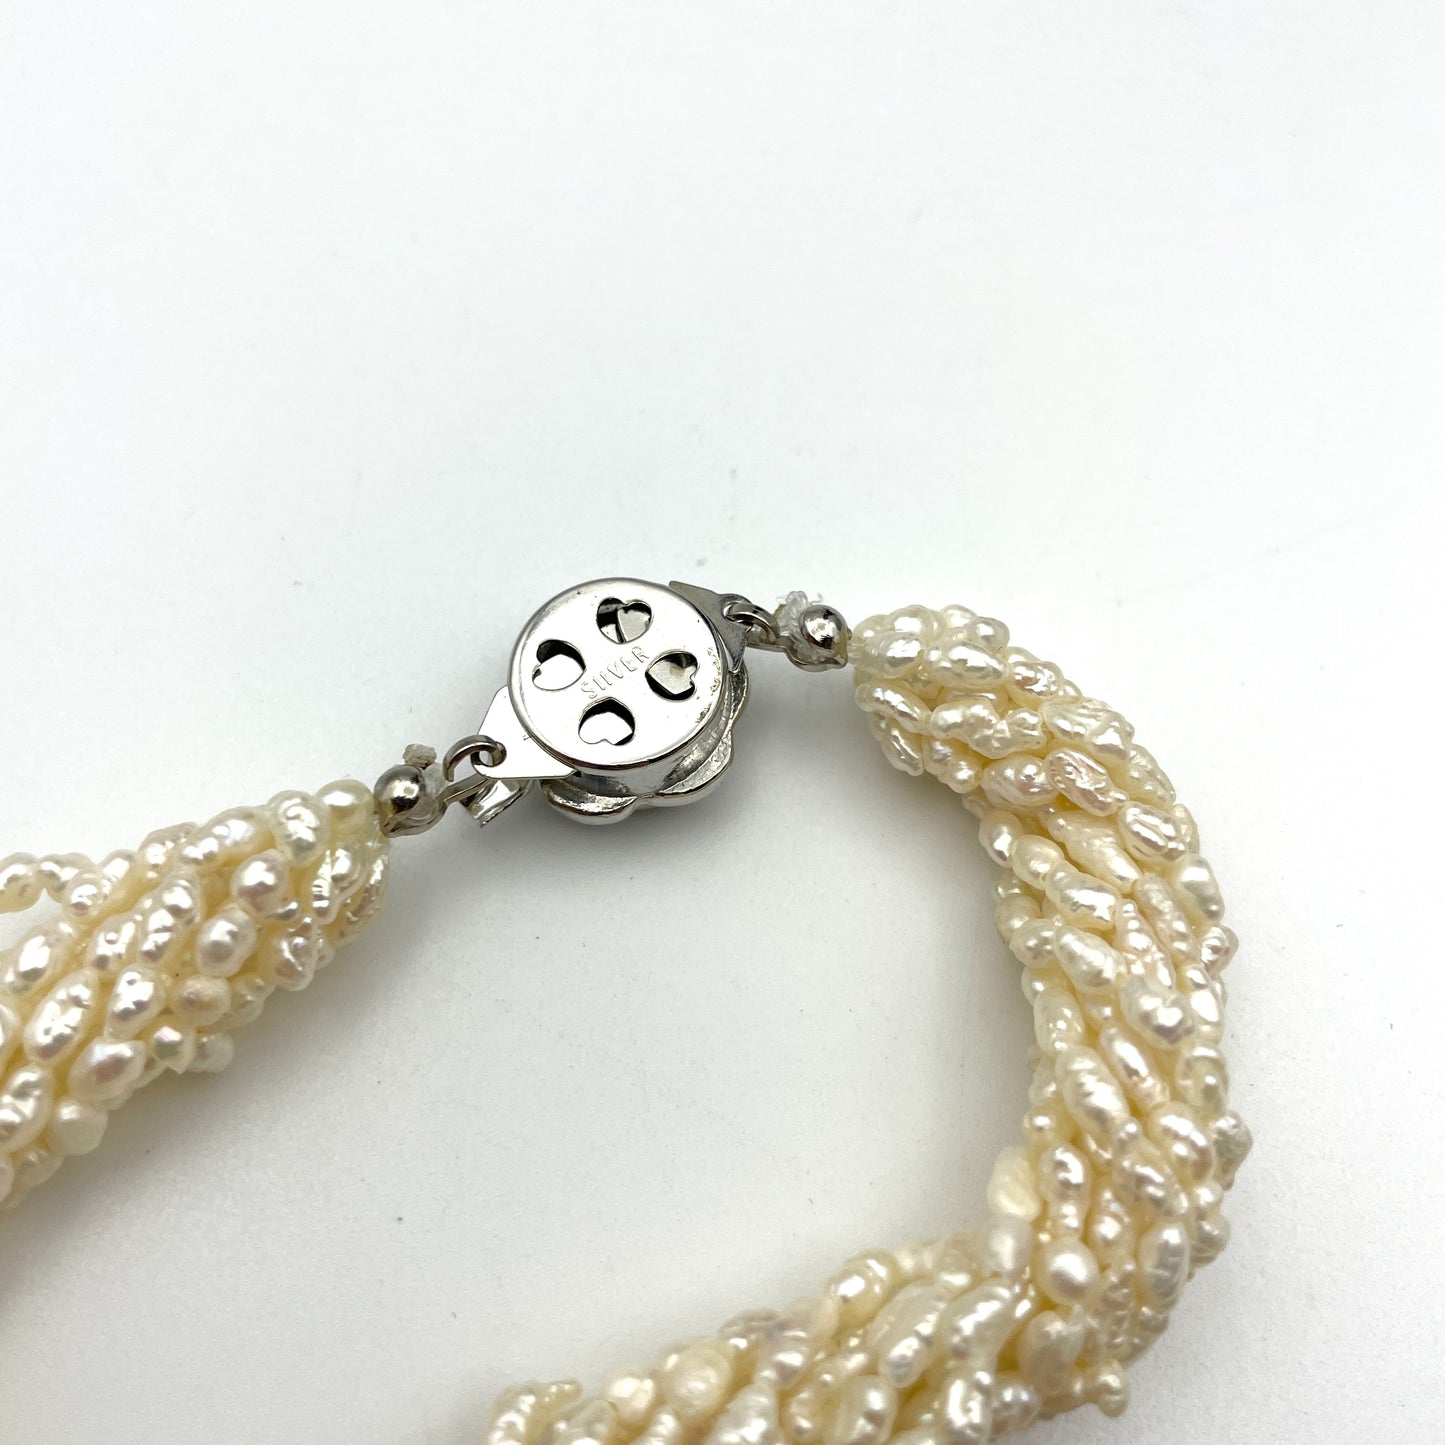 Vintage Seed Pearl Bracelet with Flower Clasp